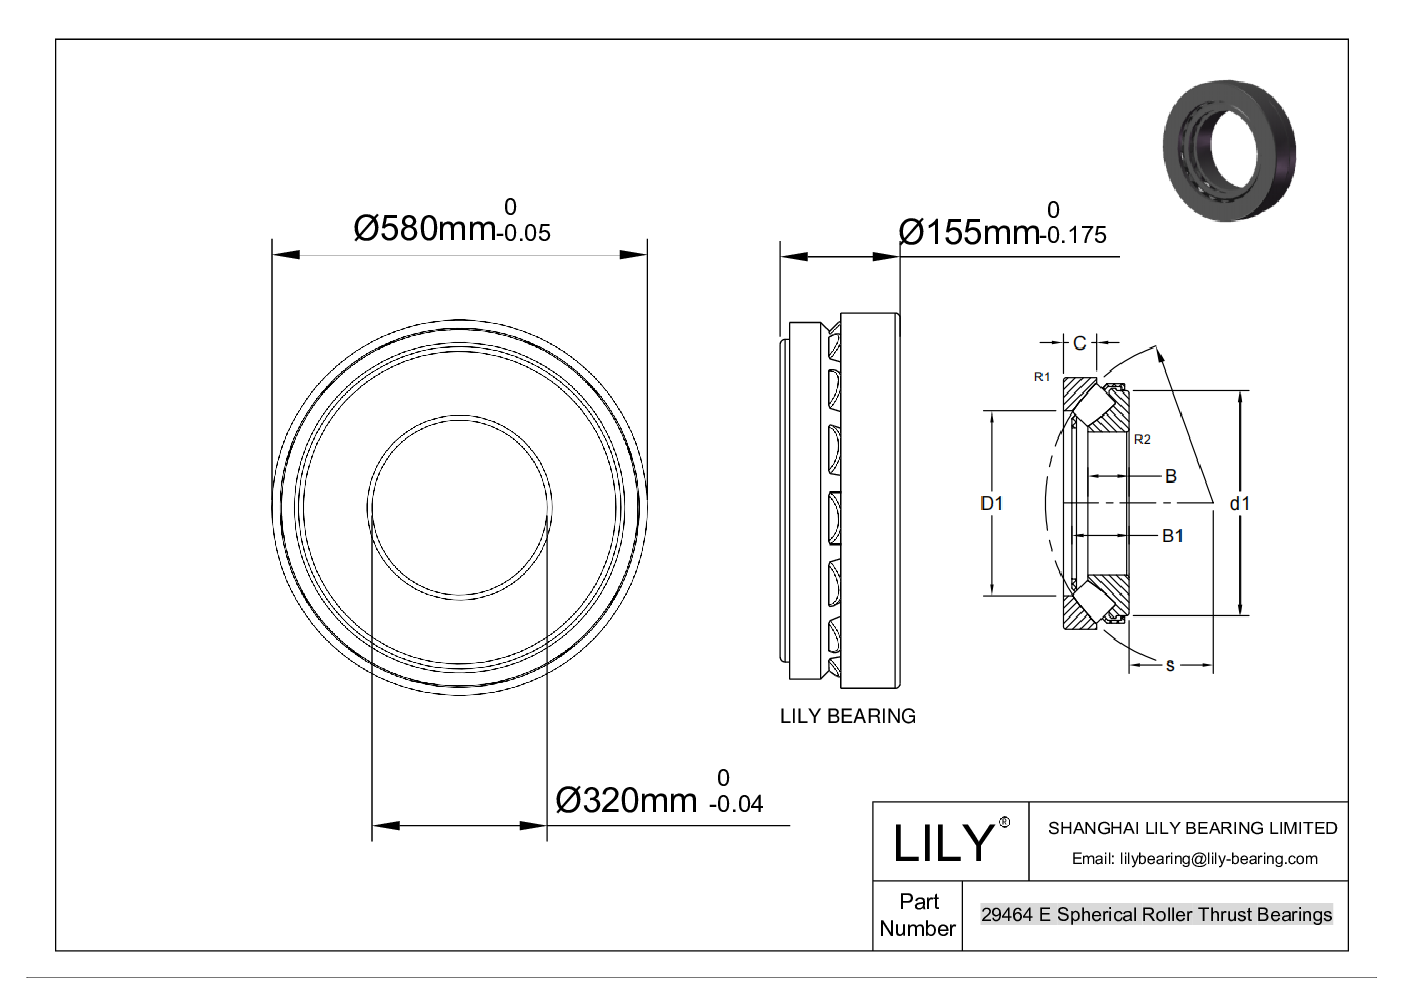 29464 E Spherical Roller Thrust Bearings cad drawing